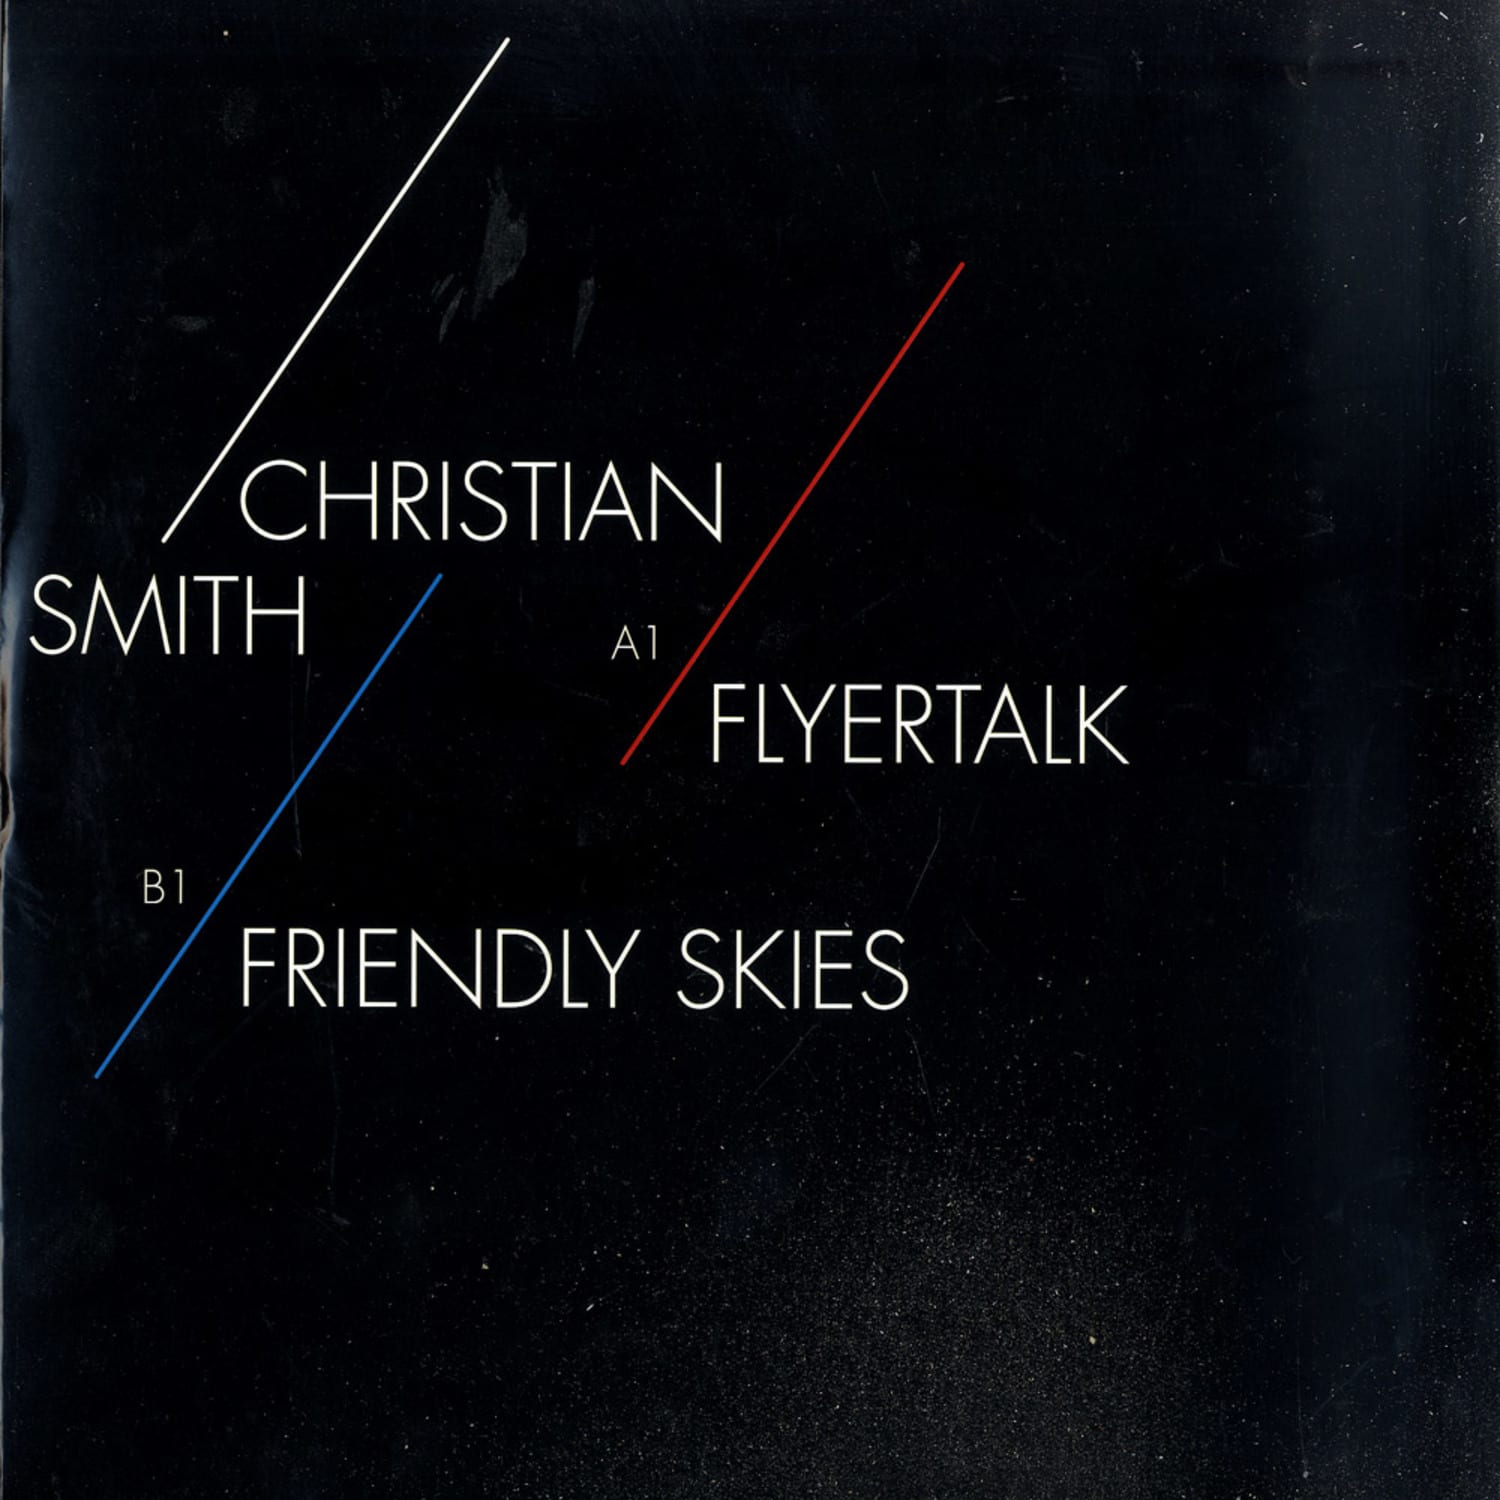 Christian Smith - FLYER TALK / FRIENDLY SKIES